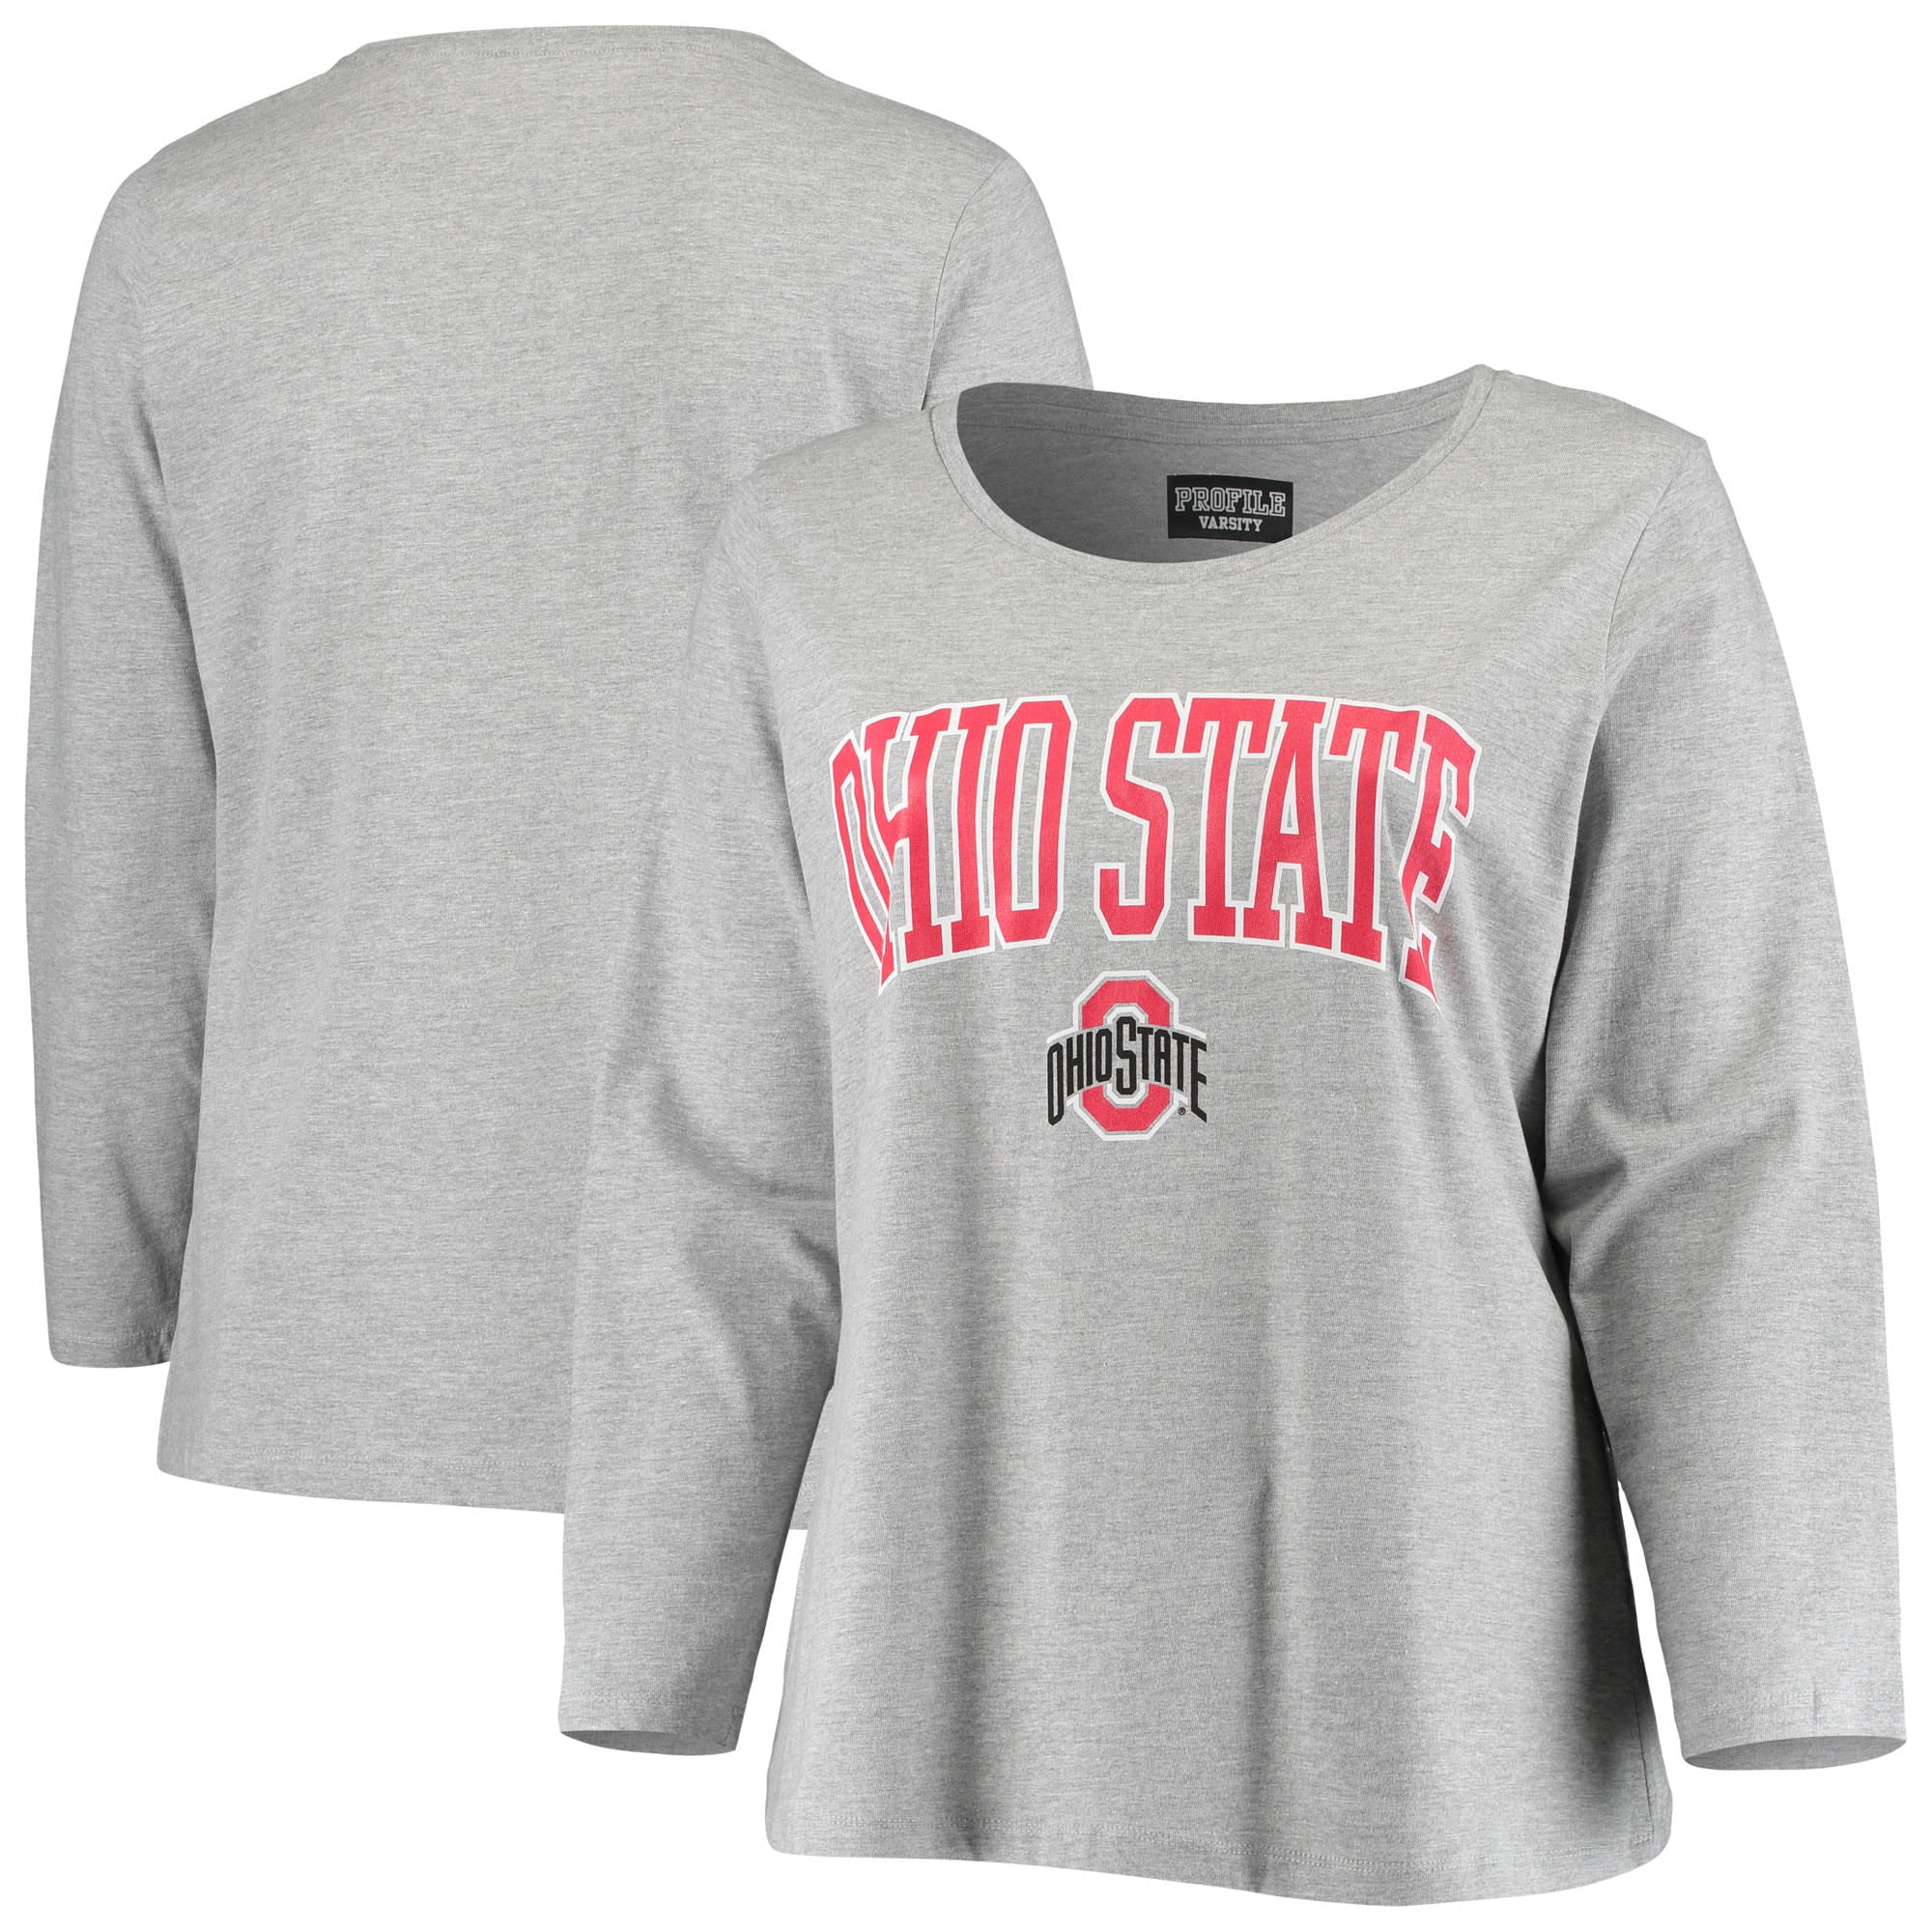 Cute Ohio Football Hoodie Ohio Tee Ohio Ohio Shirt Buckeye StateSweatshirt | Ohio Is Calling Shirt Moving to Ohio Shirt